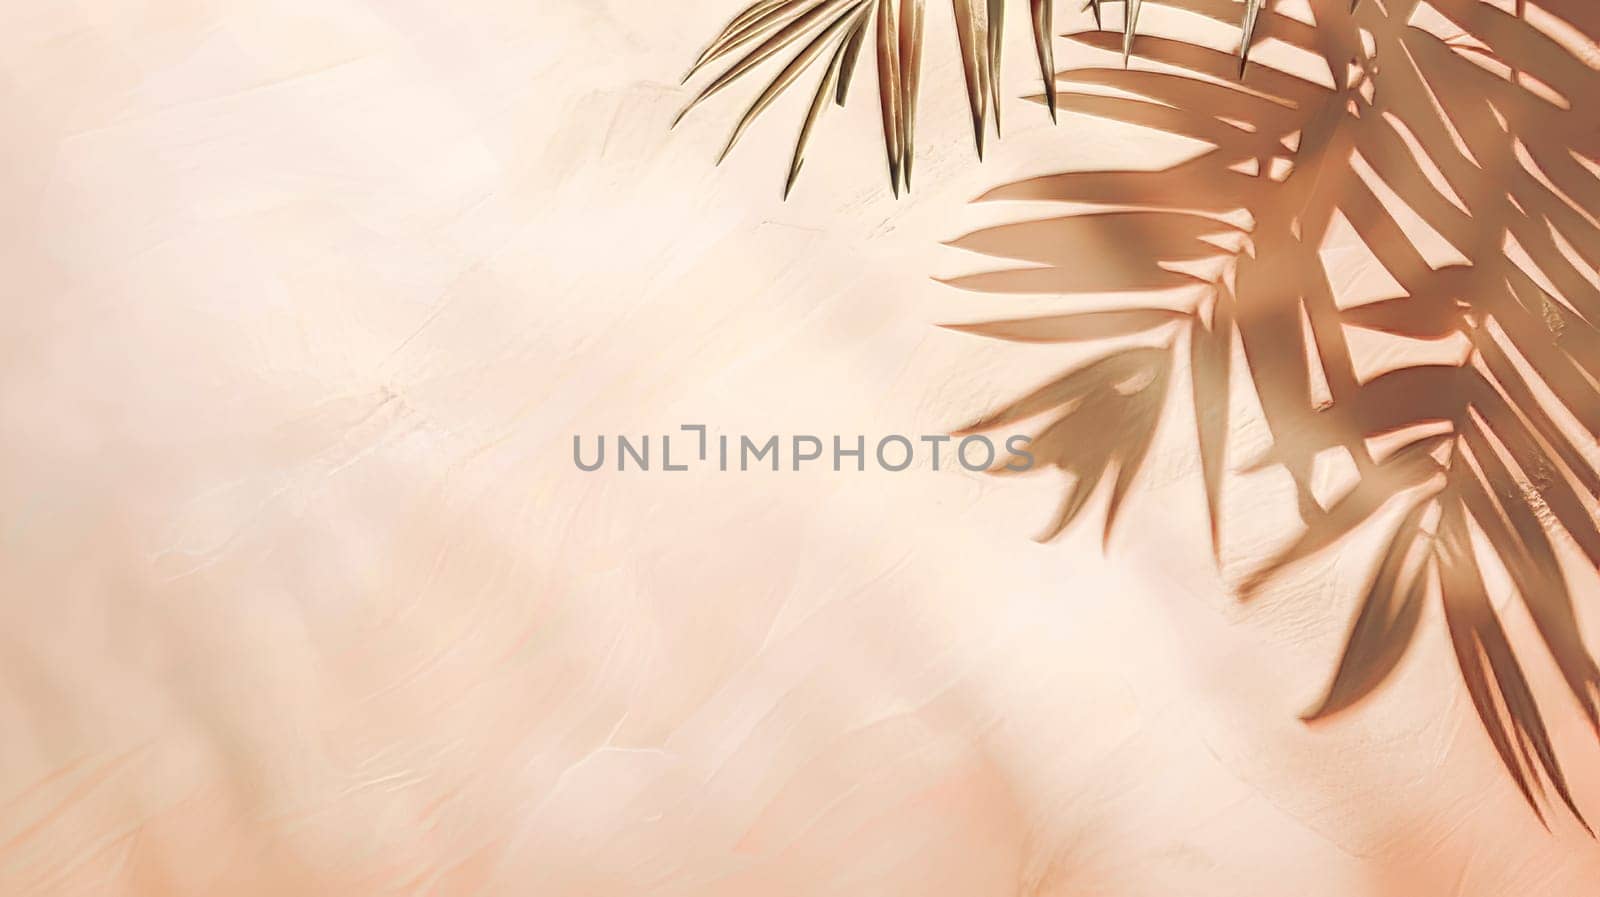 Peach background with shadow of palm leaves, tropical atmosphere. by OlgaGubskaya